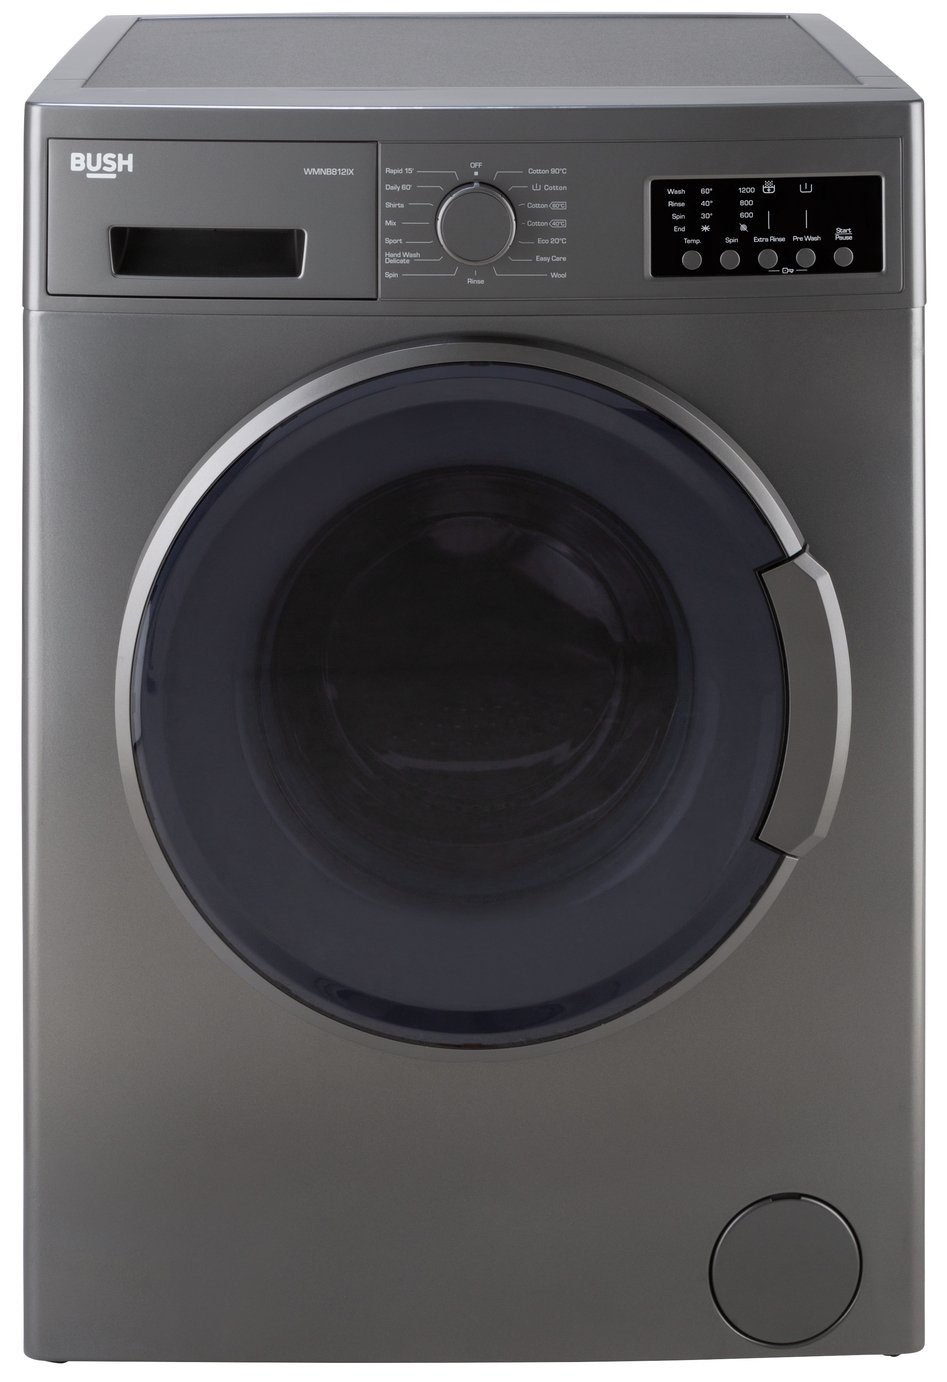 Bush WMNB812IX 8KG 1200 Spin Washing Machine - Inox